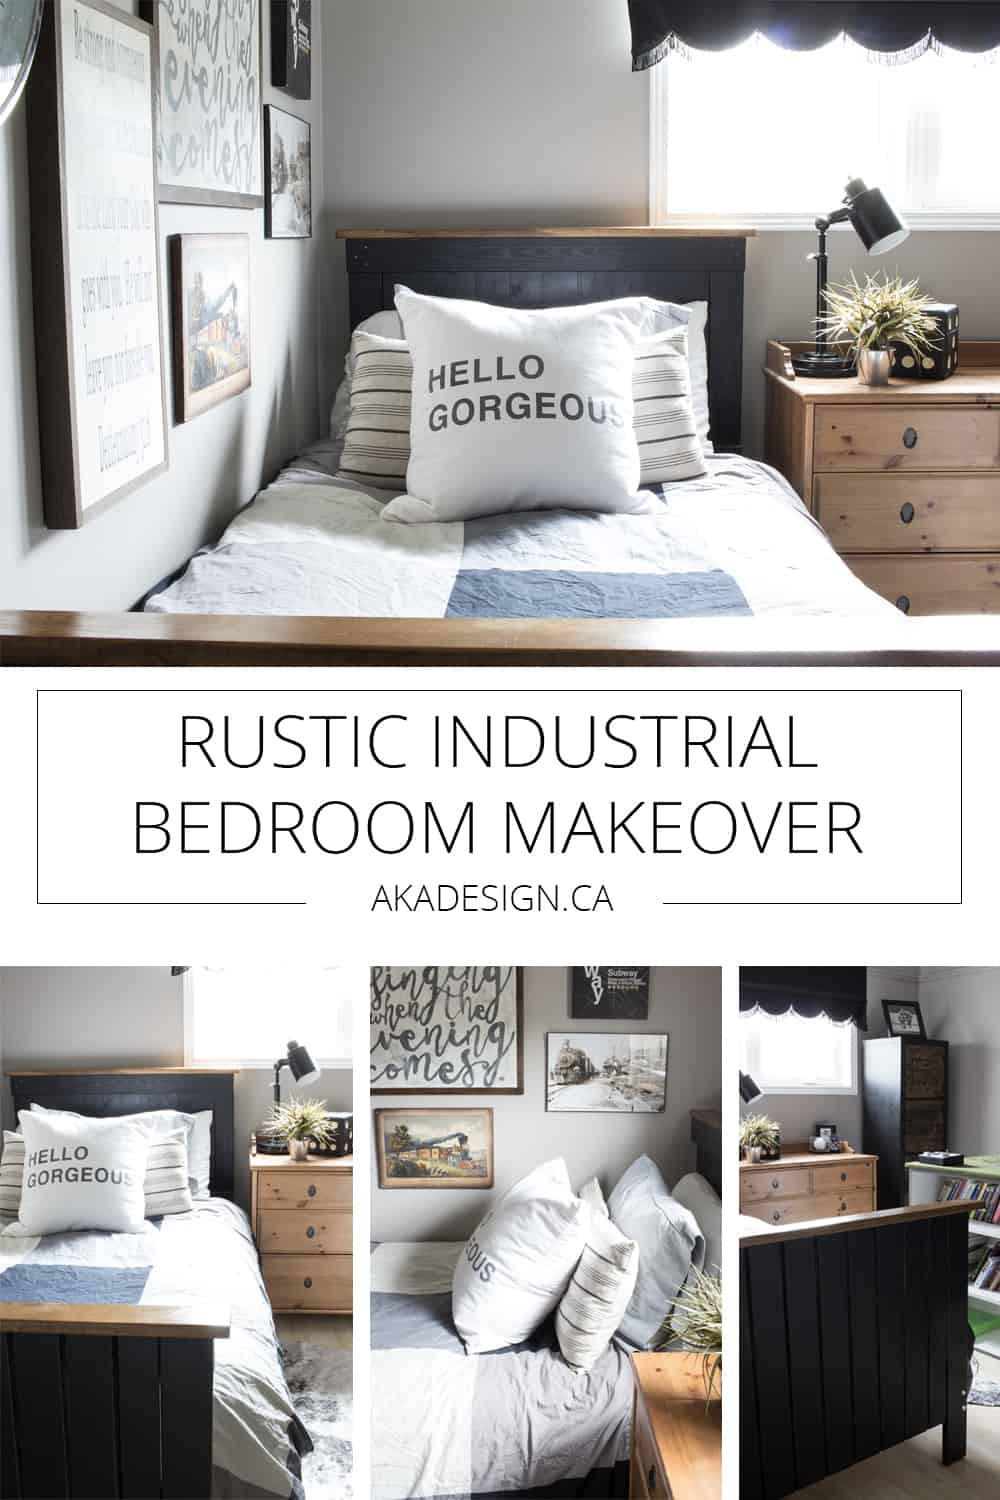 Rustic Industrial Bedroom
 A Rustic Industrial Bedroom For a Teenage Boy and